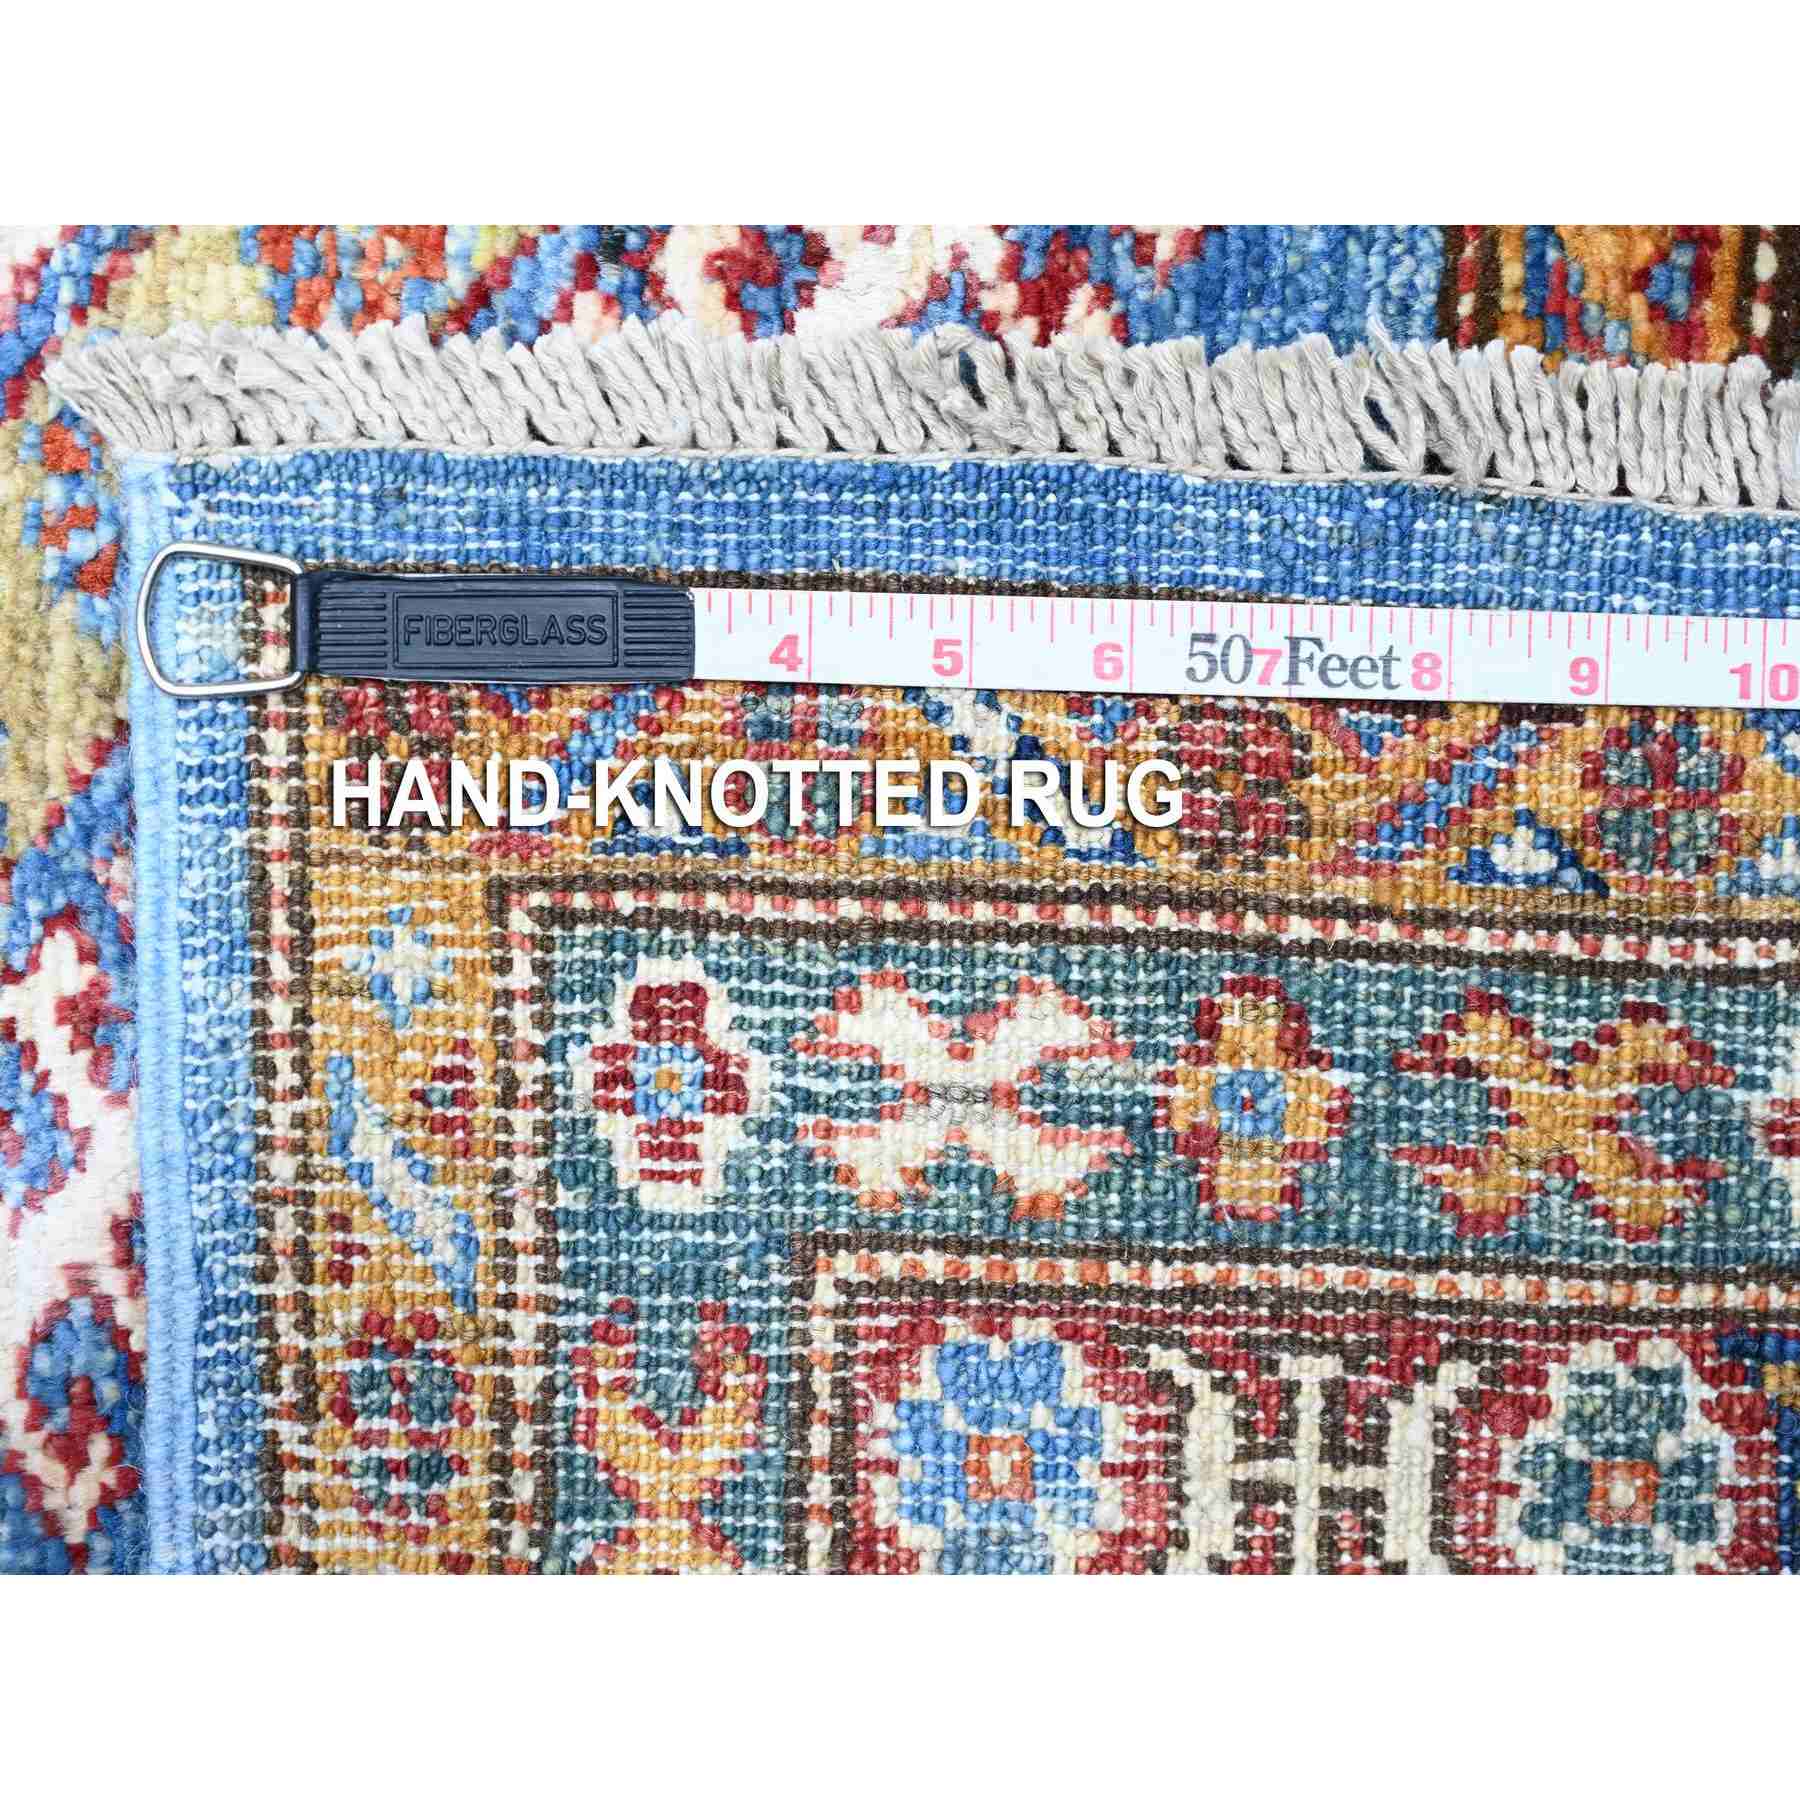 Kazak-Hand-Knotted-Rug-446380